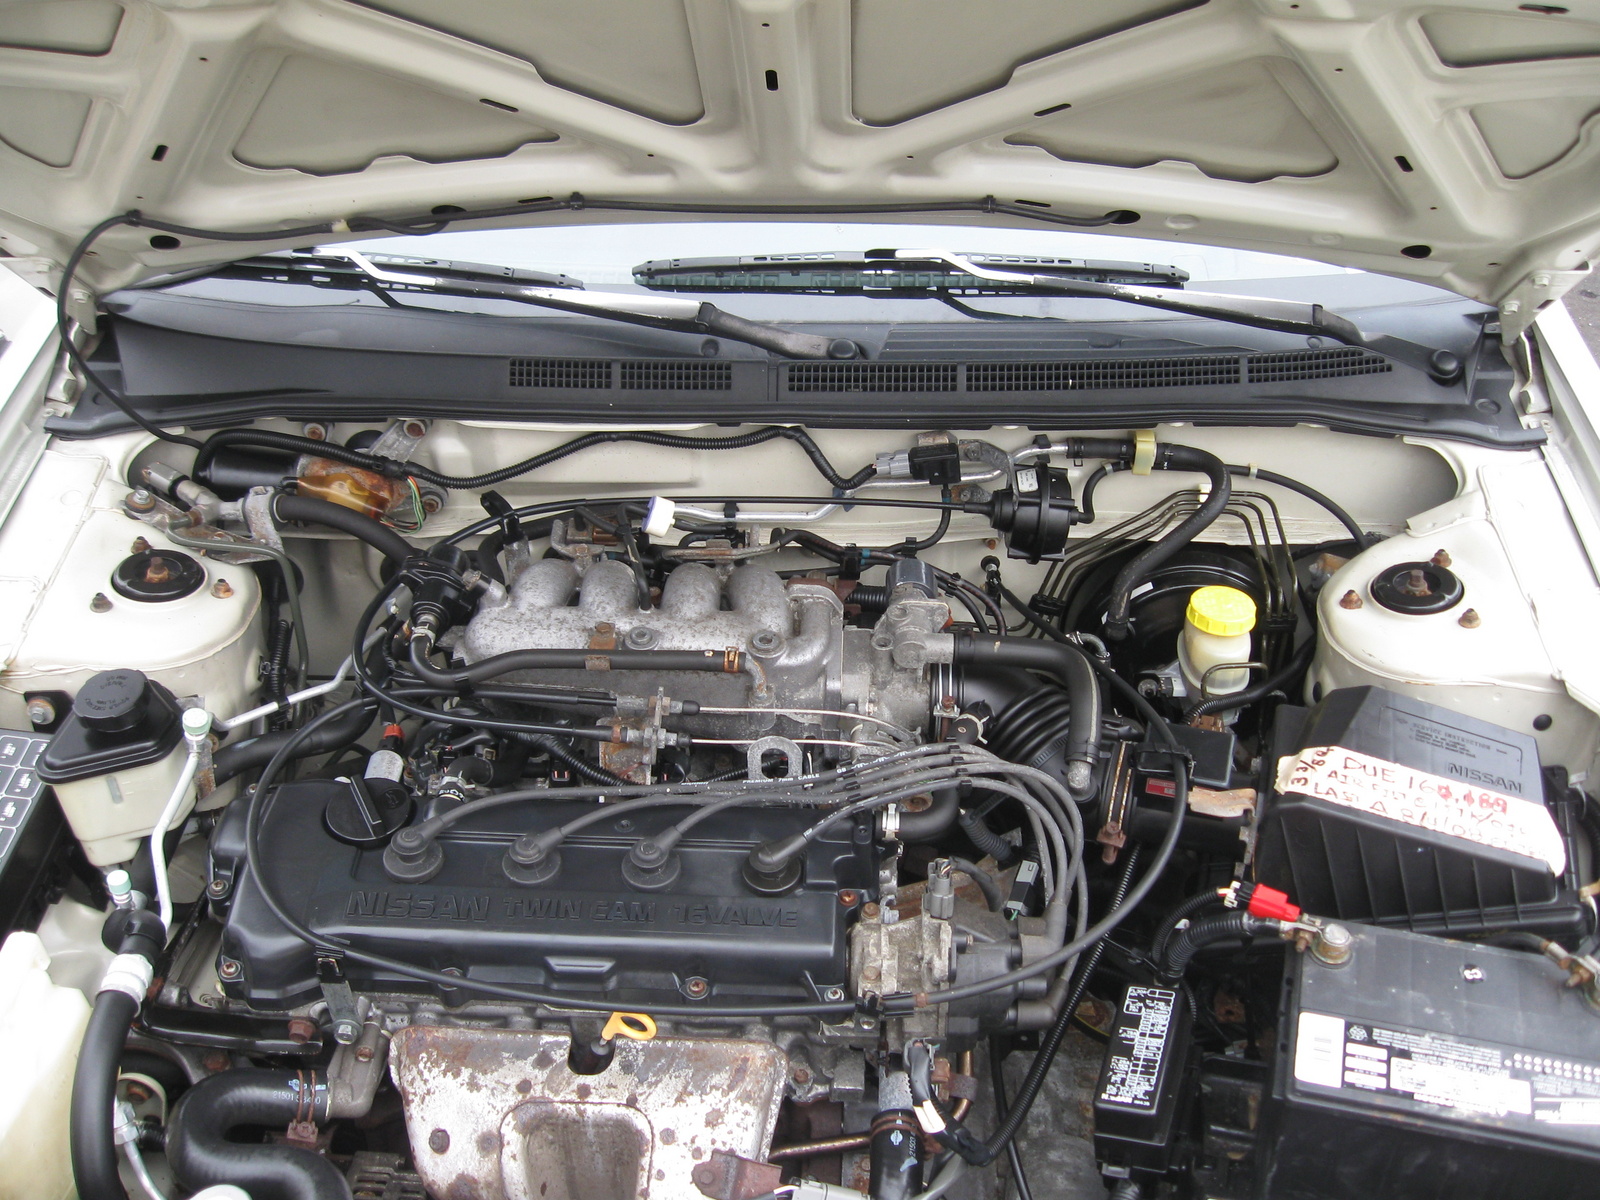 1997 Nissan sentra engine specs #3